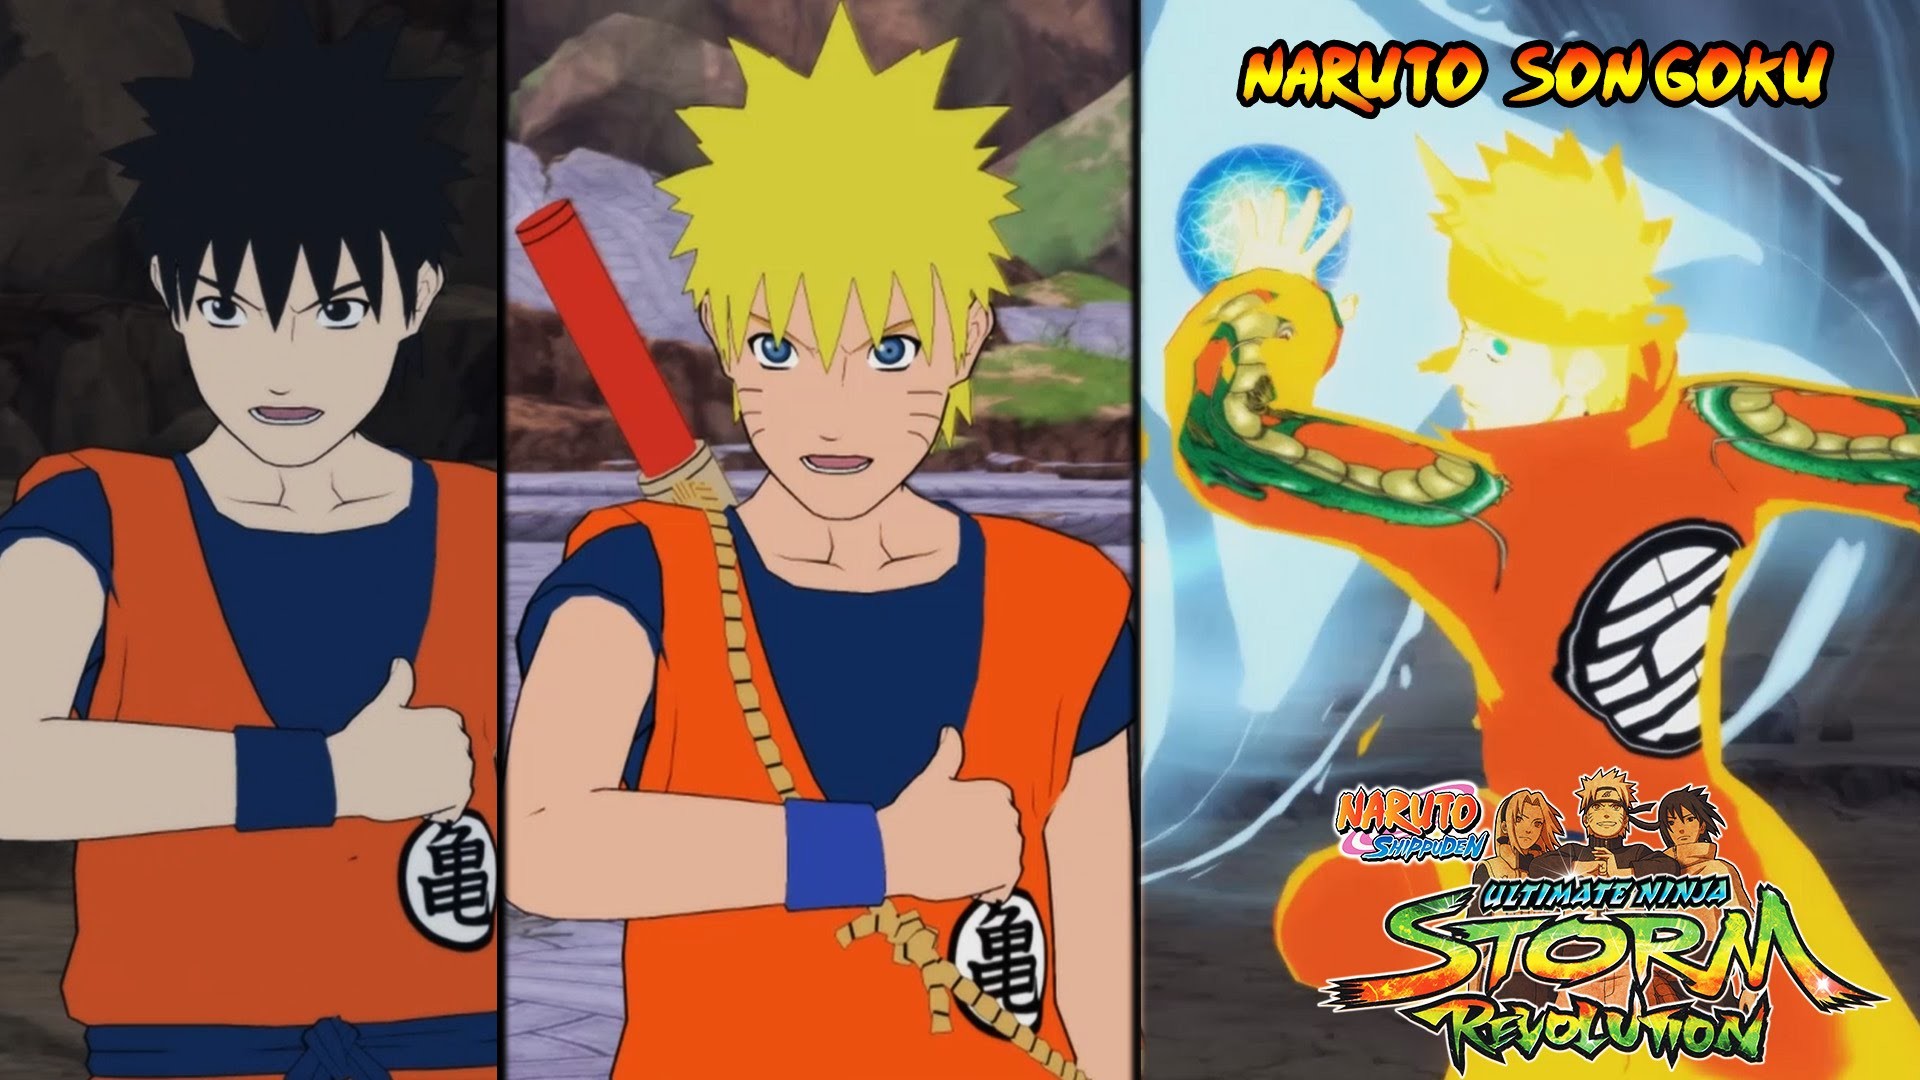 1920x1080 Naruto Shippuden Ultimate Ninja Storm Revolution - Naruto Son Goku All  Forms Mod - YouTube